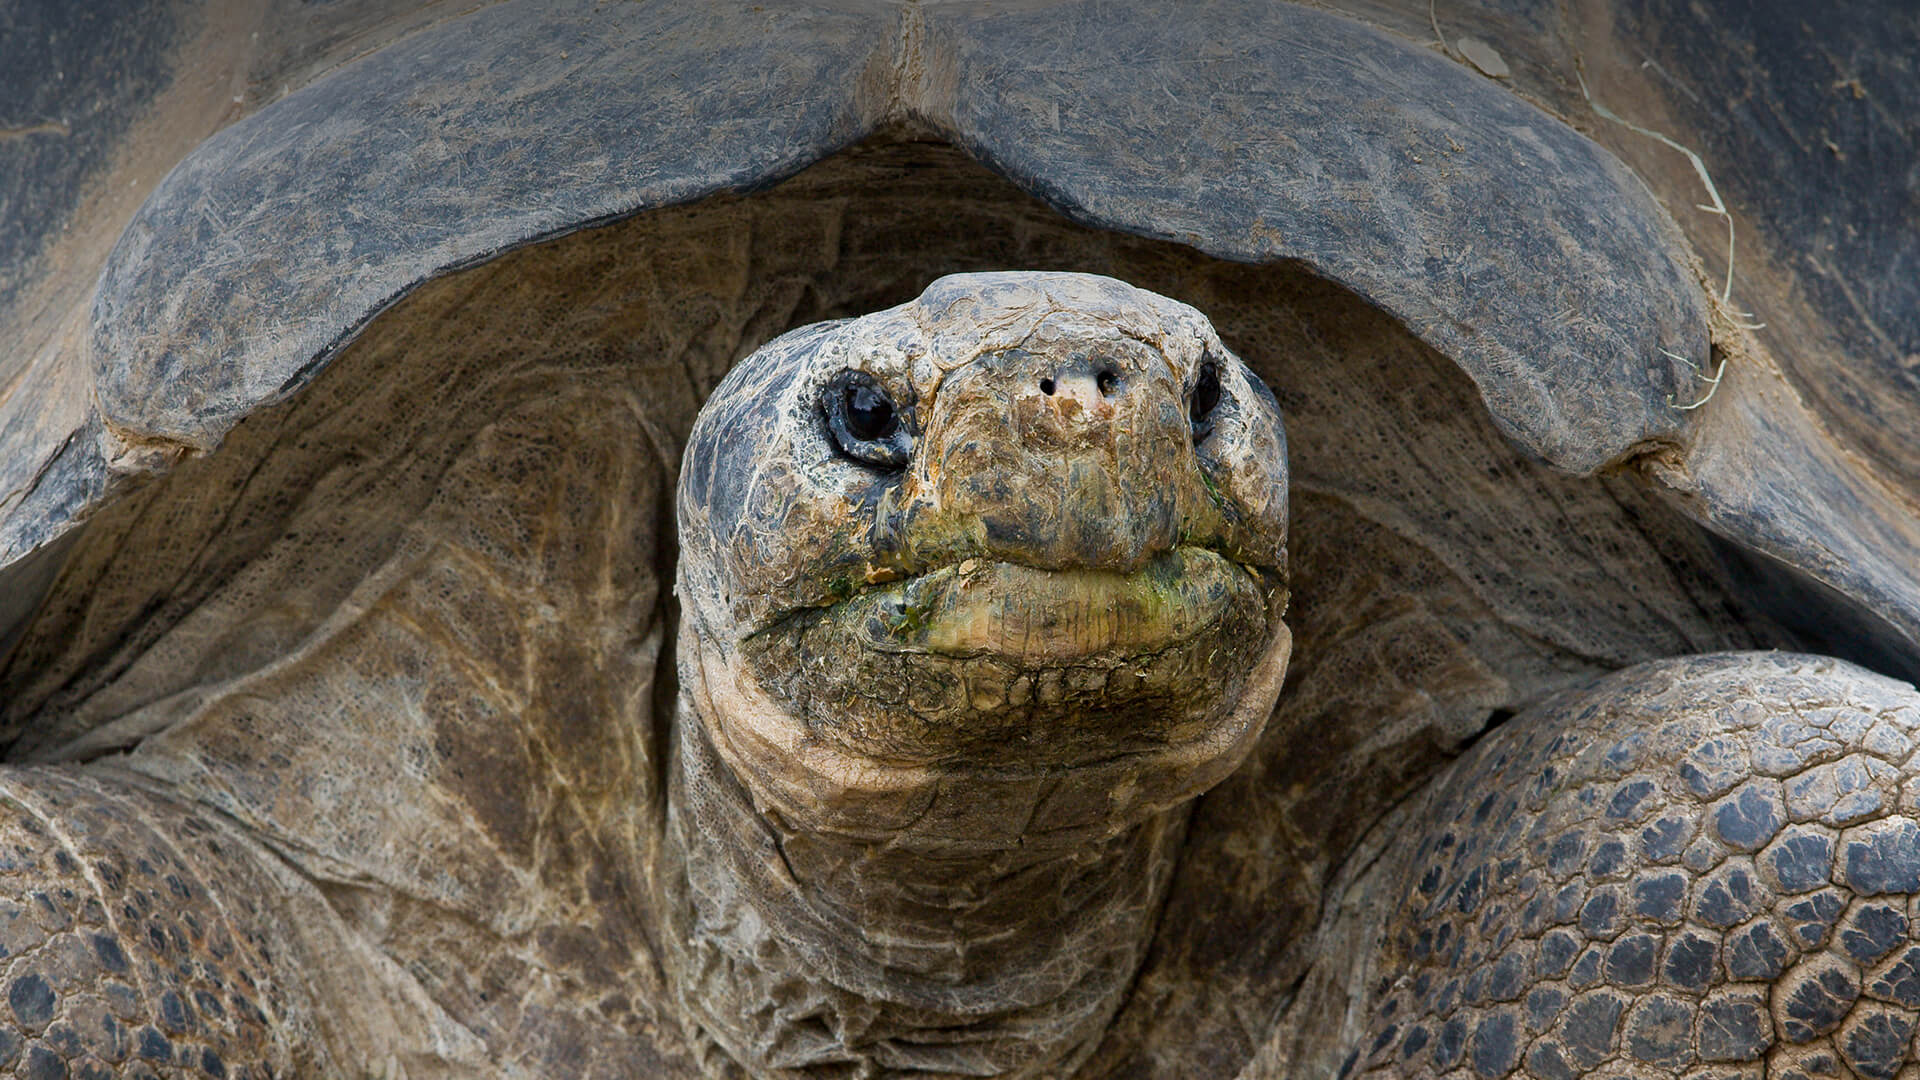 Galápagos Tortoise | San Diego Zoo Animals & Plants